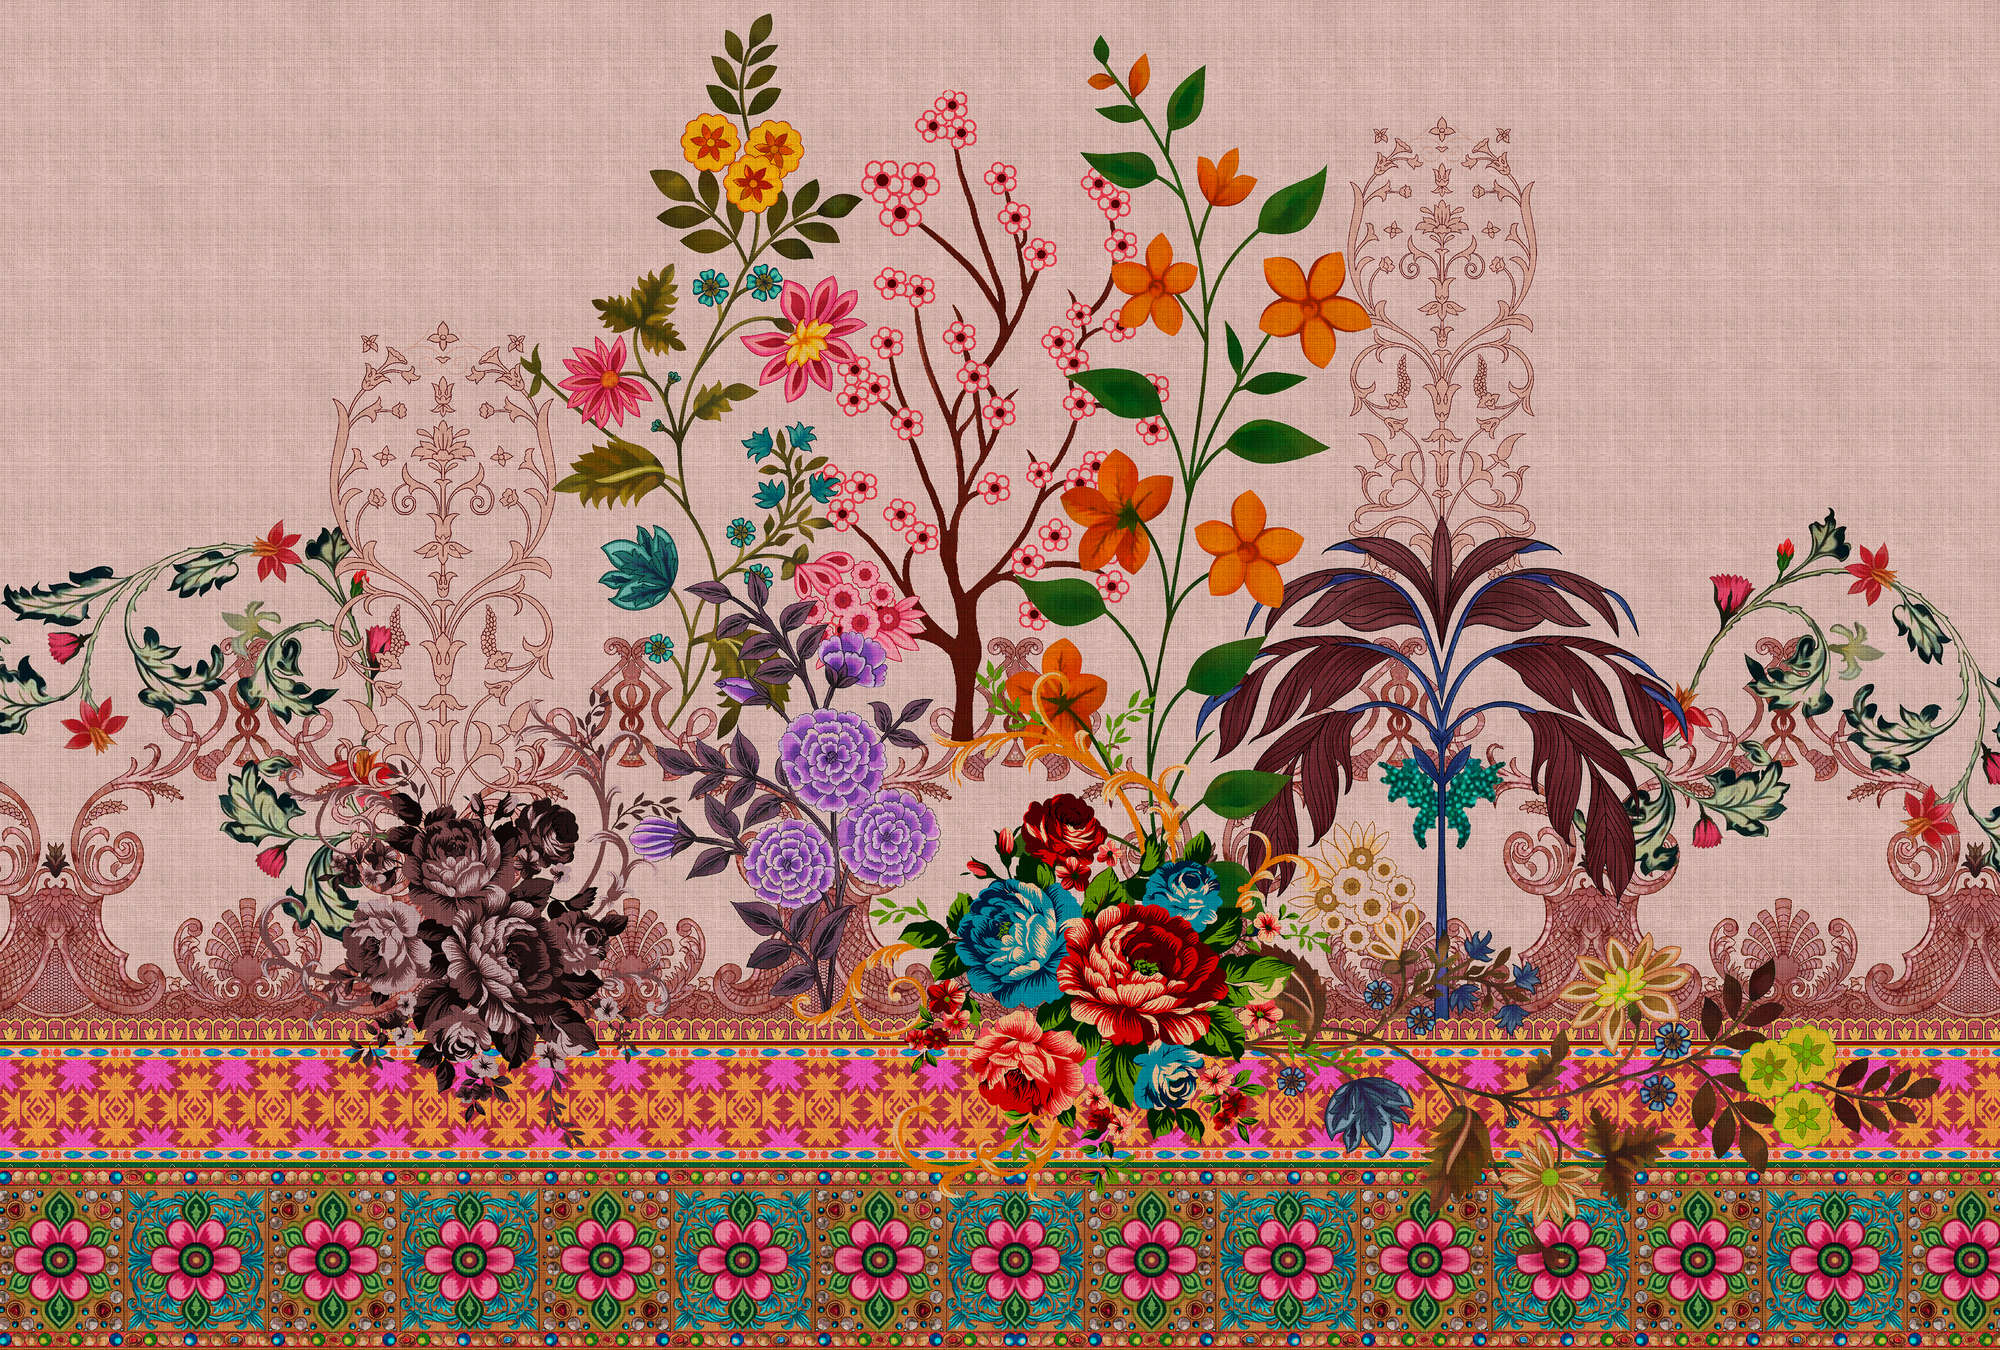             Oriental Garden 4 – Blumen Fototapete Blüten & Borten Muster
        